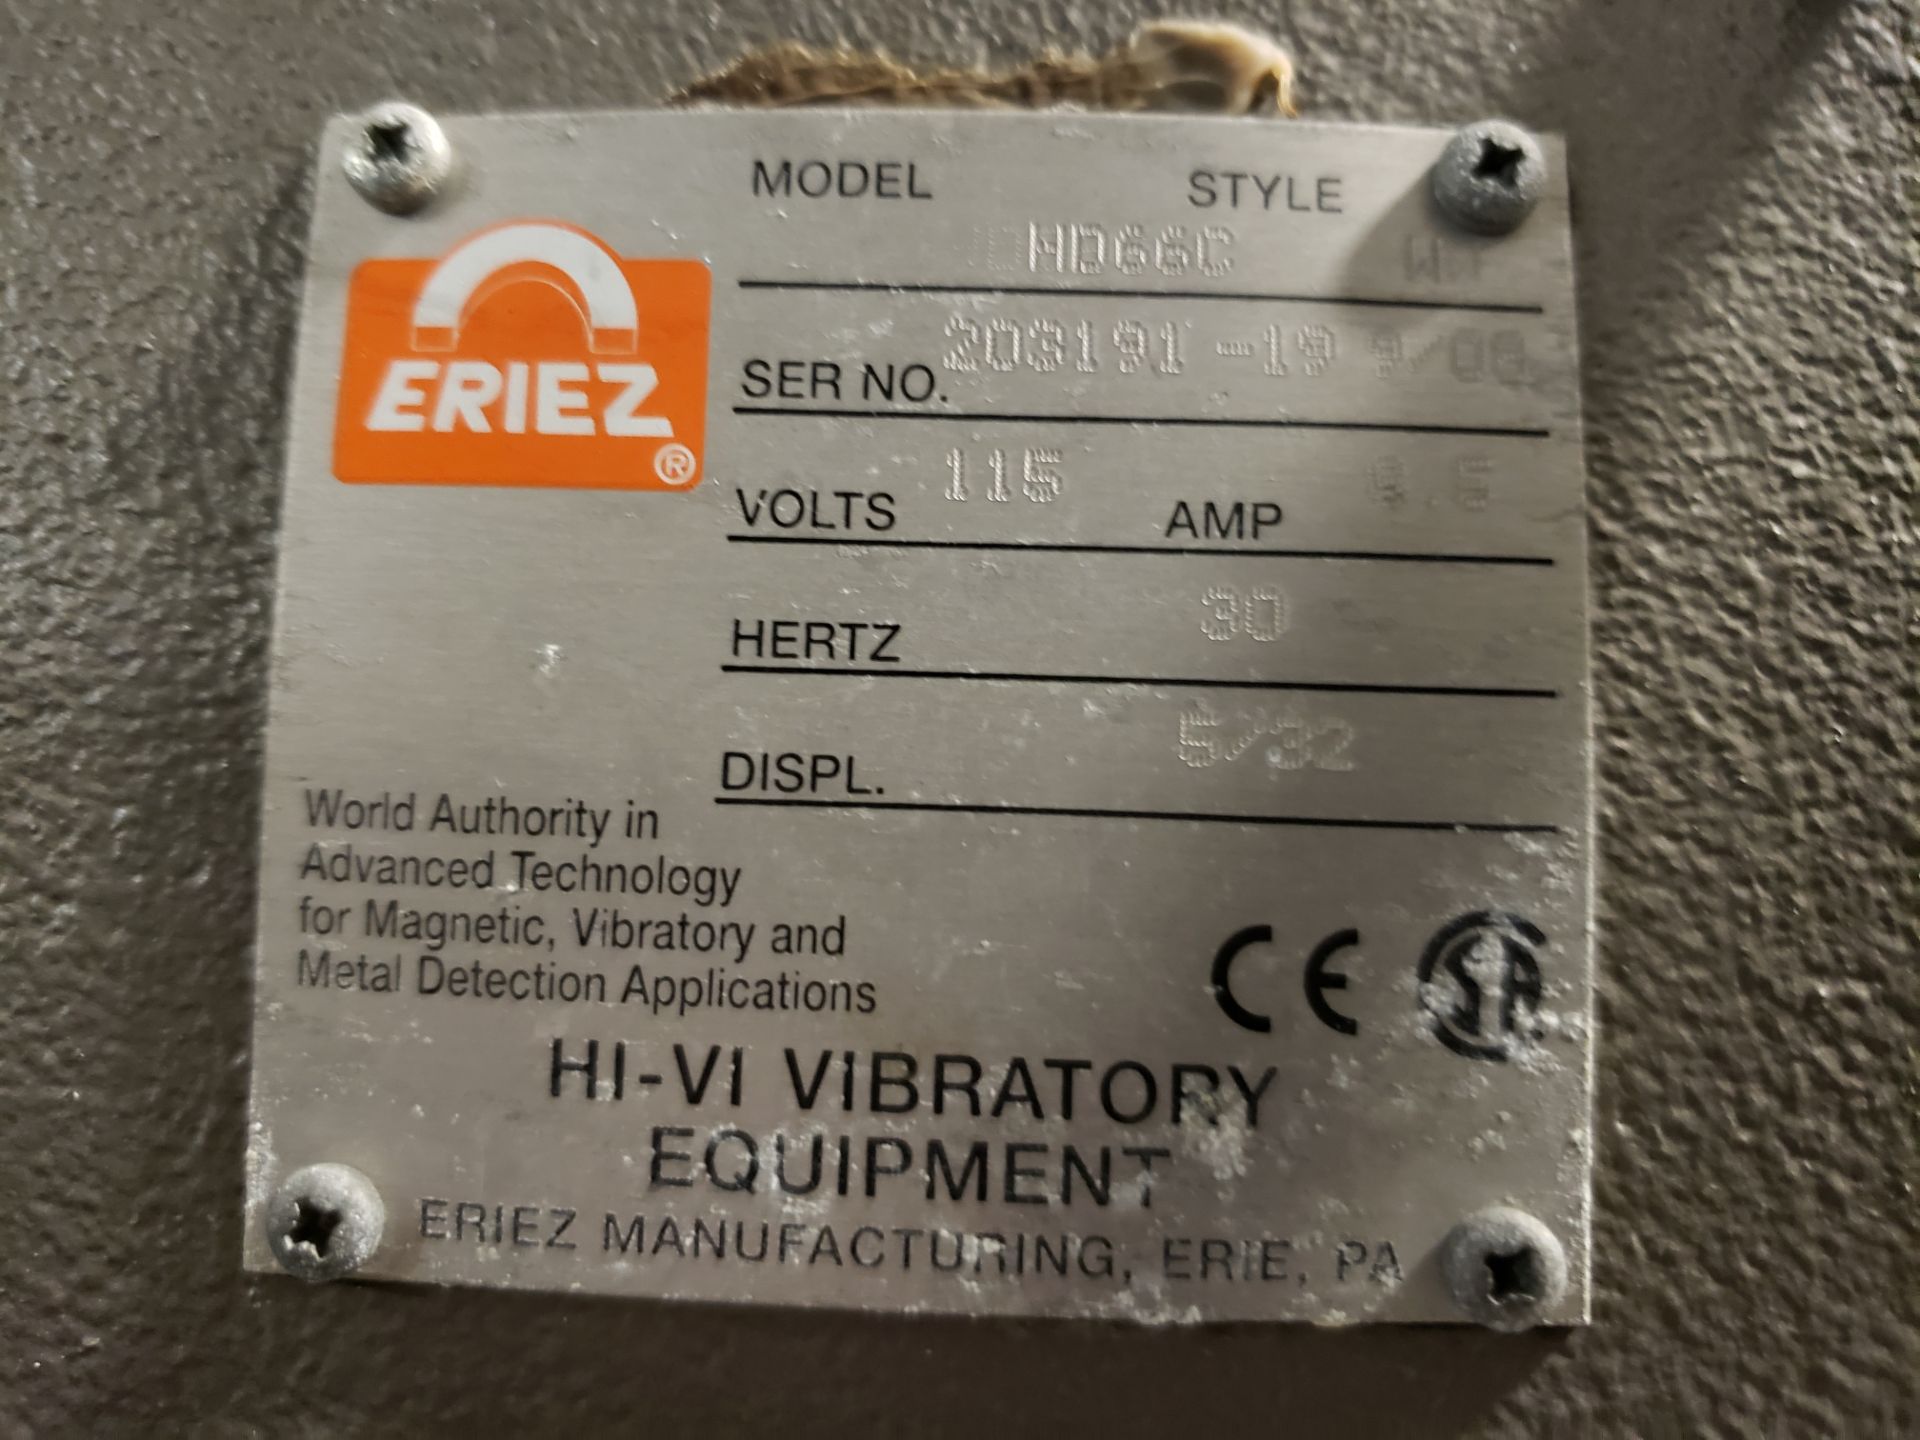 Eriez HD66C - W 12" High Deflection Vibratory Feeder, S/N 203191-19 | Rig Fee $350 - Image 3 of 5